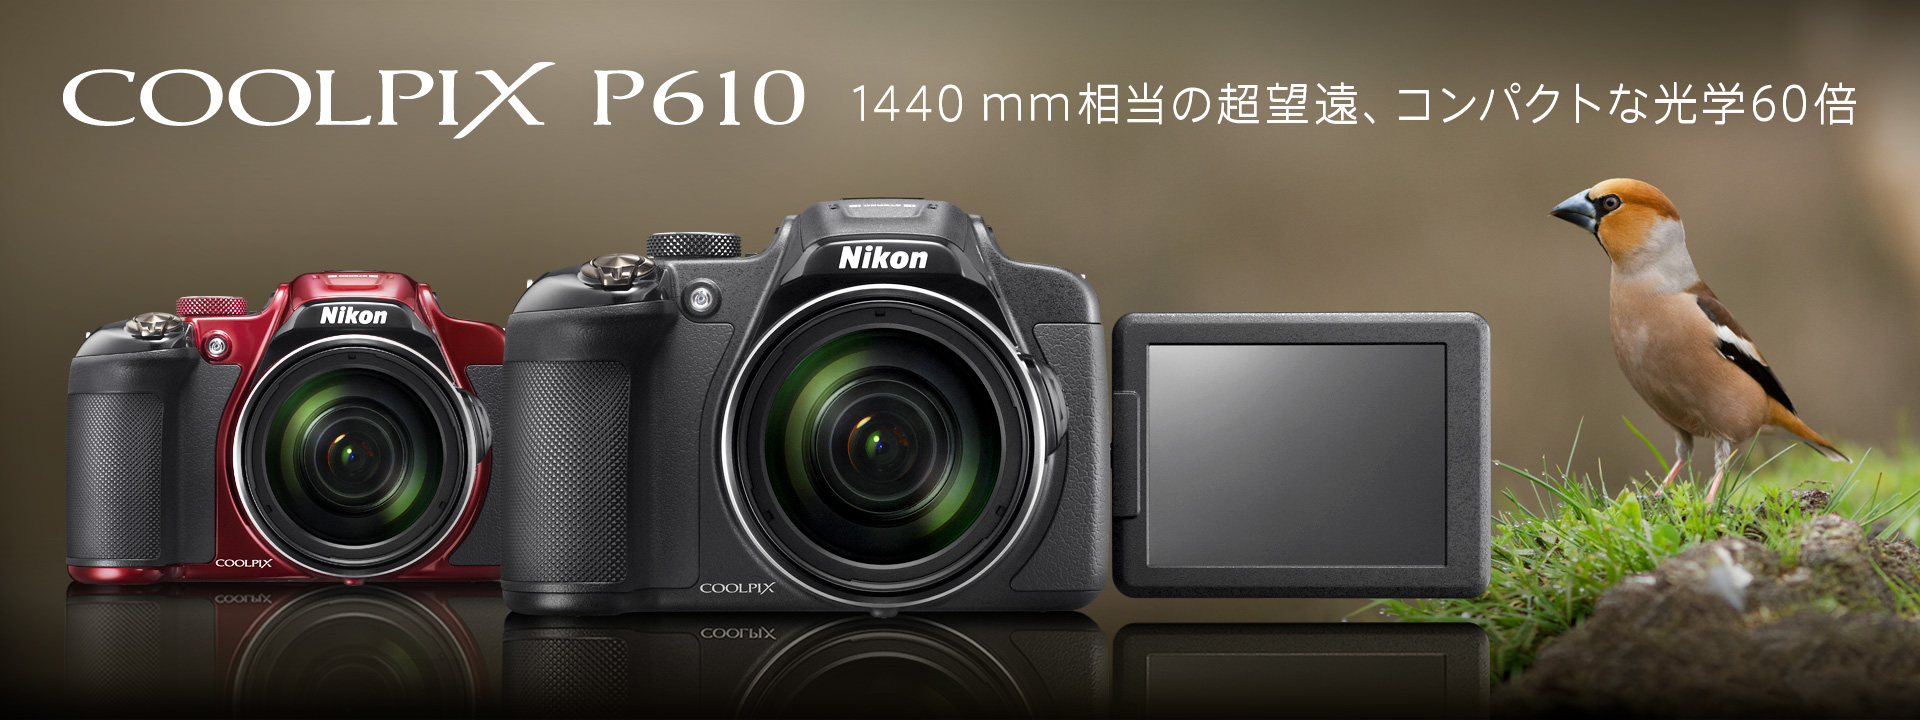 Nikon COOLPIX P610 コンパクトデジタルカメラ-